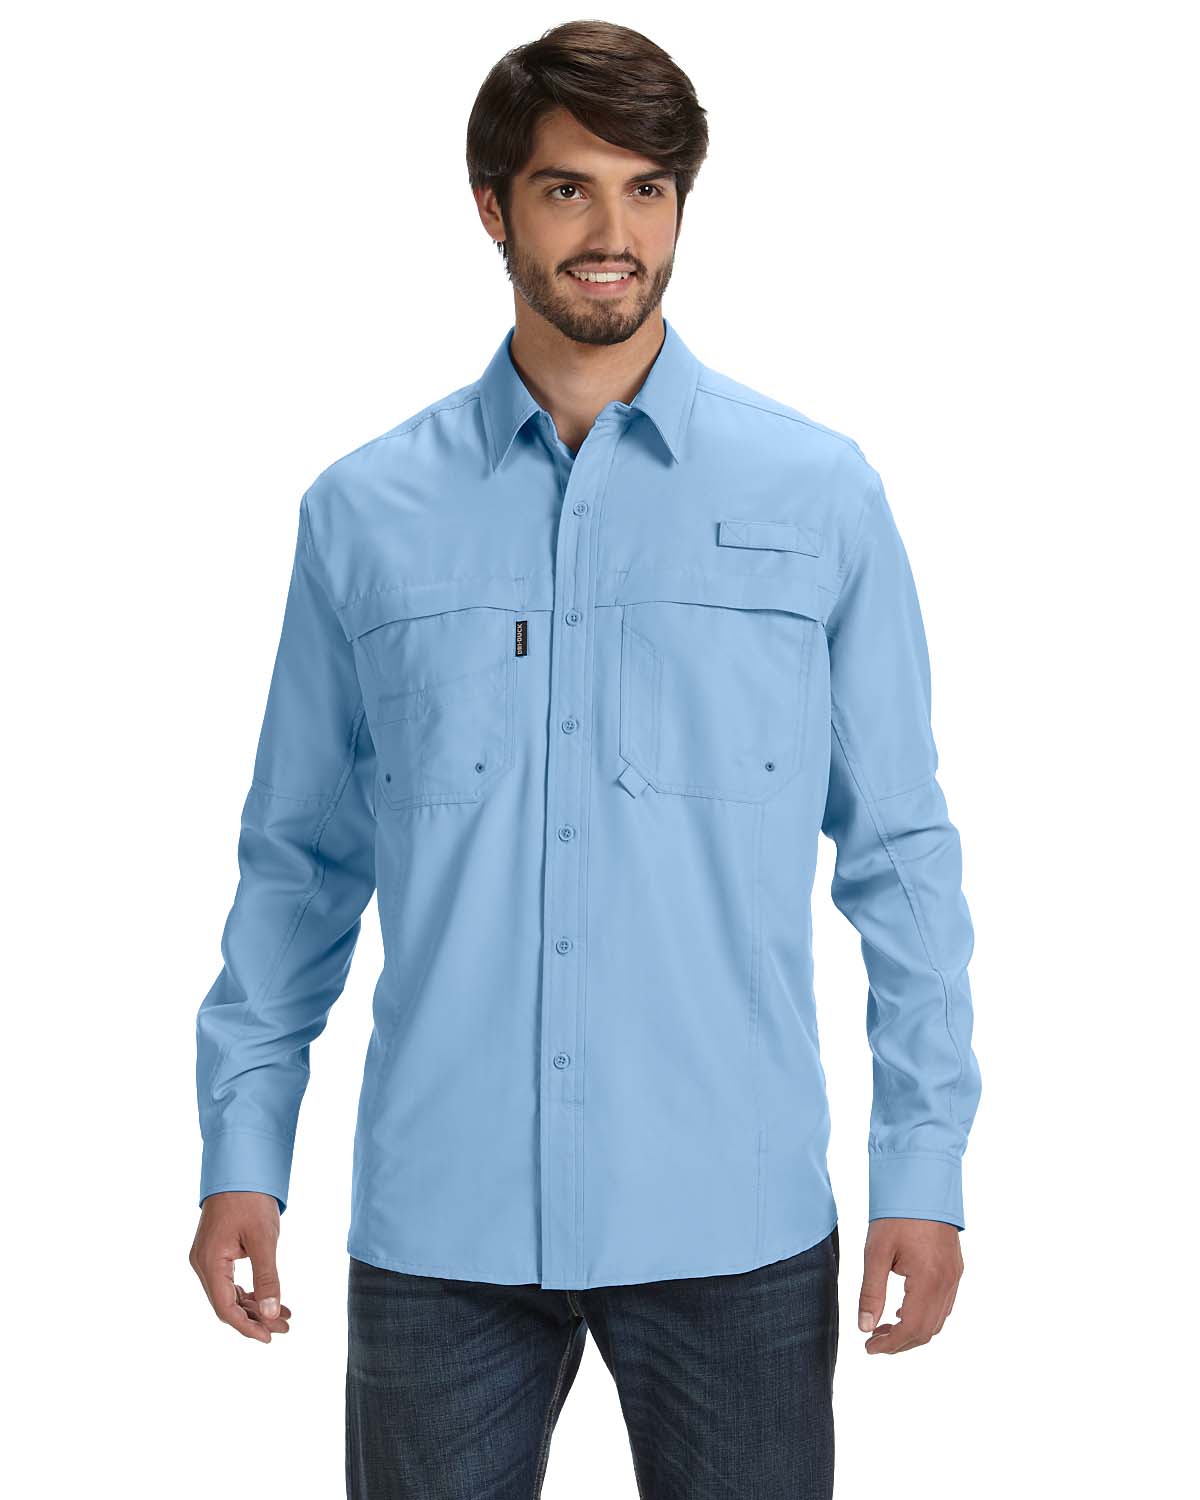 https://images.shirtspace.com/fullsize/l4D5dpL5WSE3crEm1YW4uw%3D%3D/140588/2835-dri-duck-dd4405-men-s-100-polyester-long-sleeve-fishing-shirt-front-sky.jpg